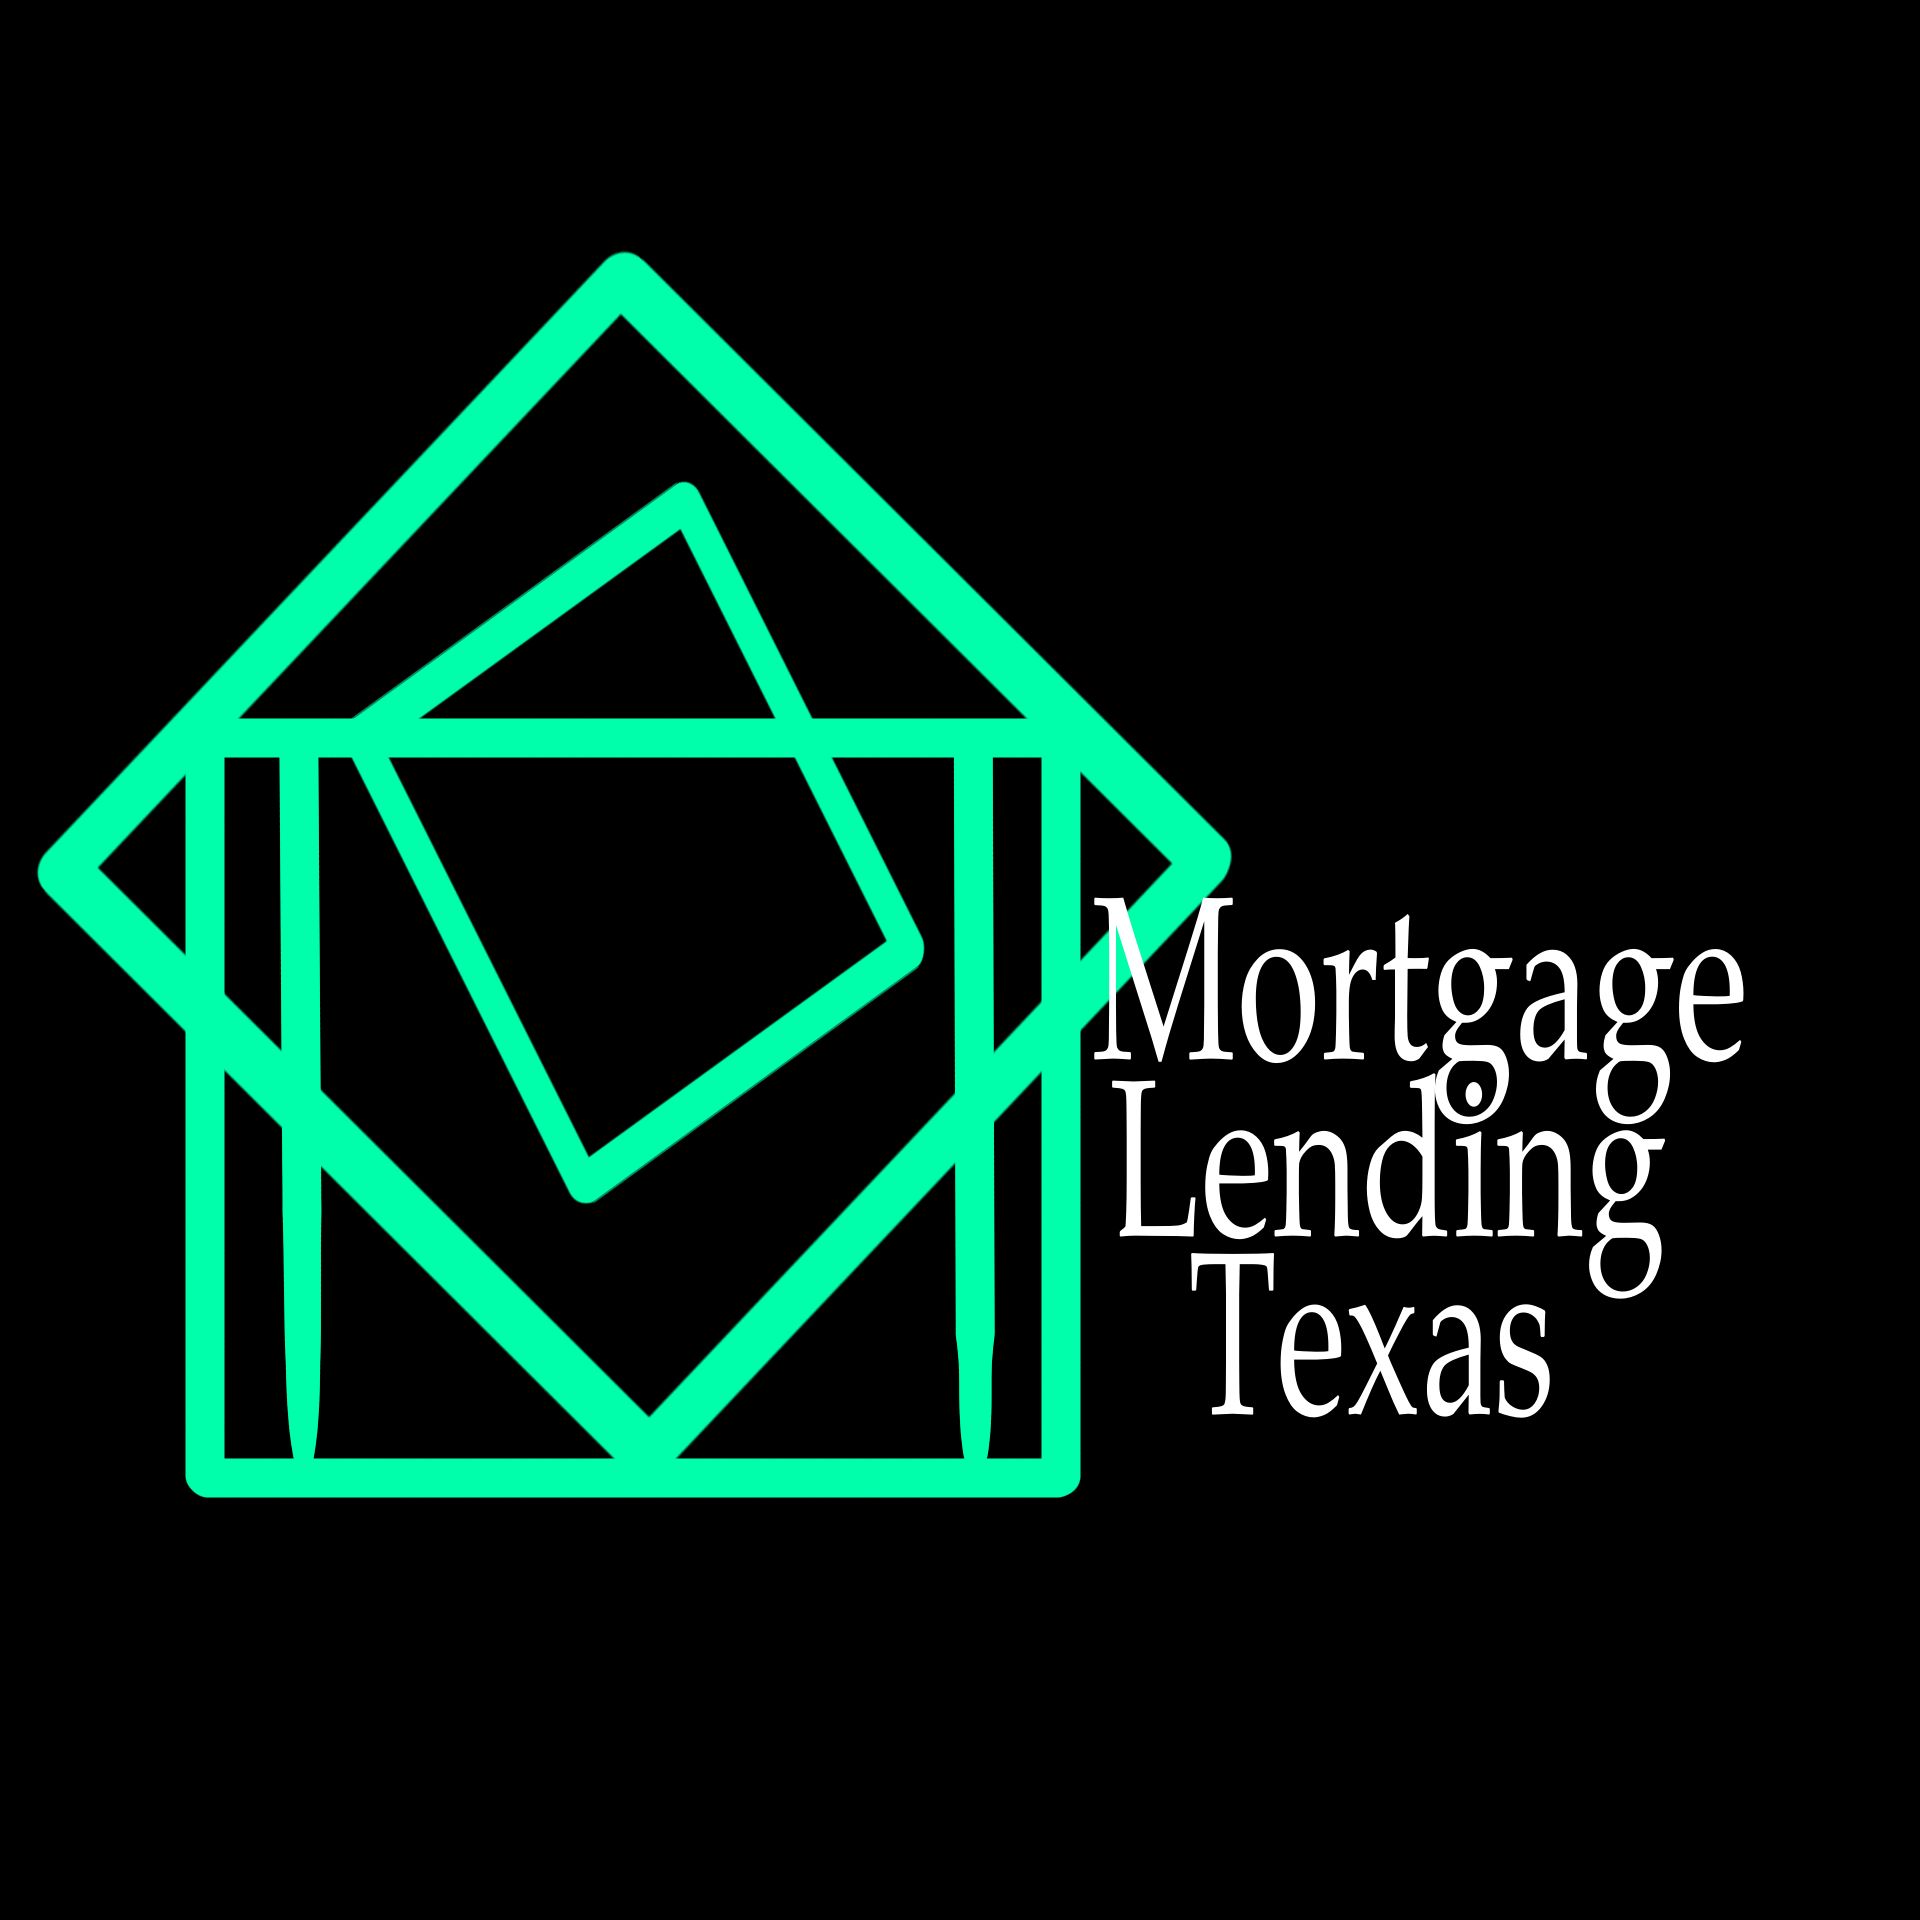 Best FHA lender in fort worth Texas